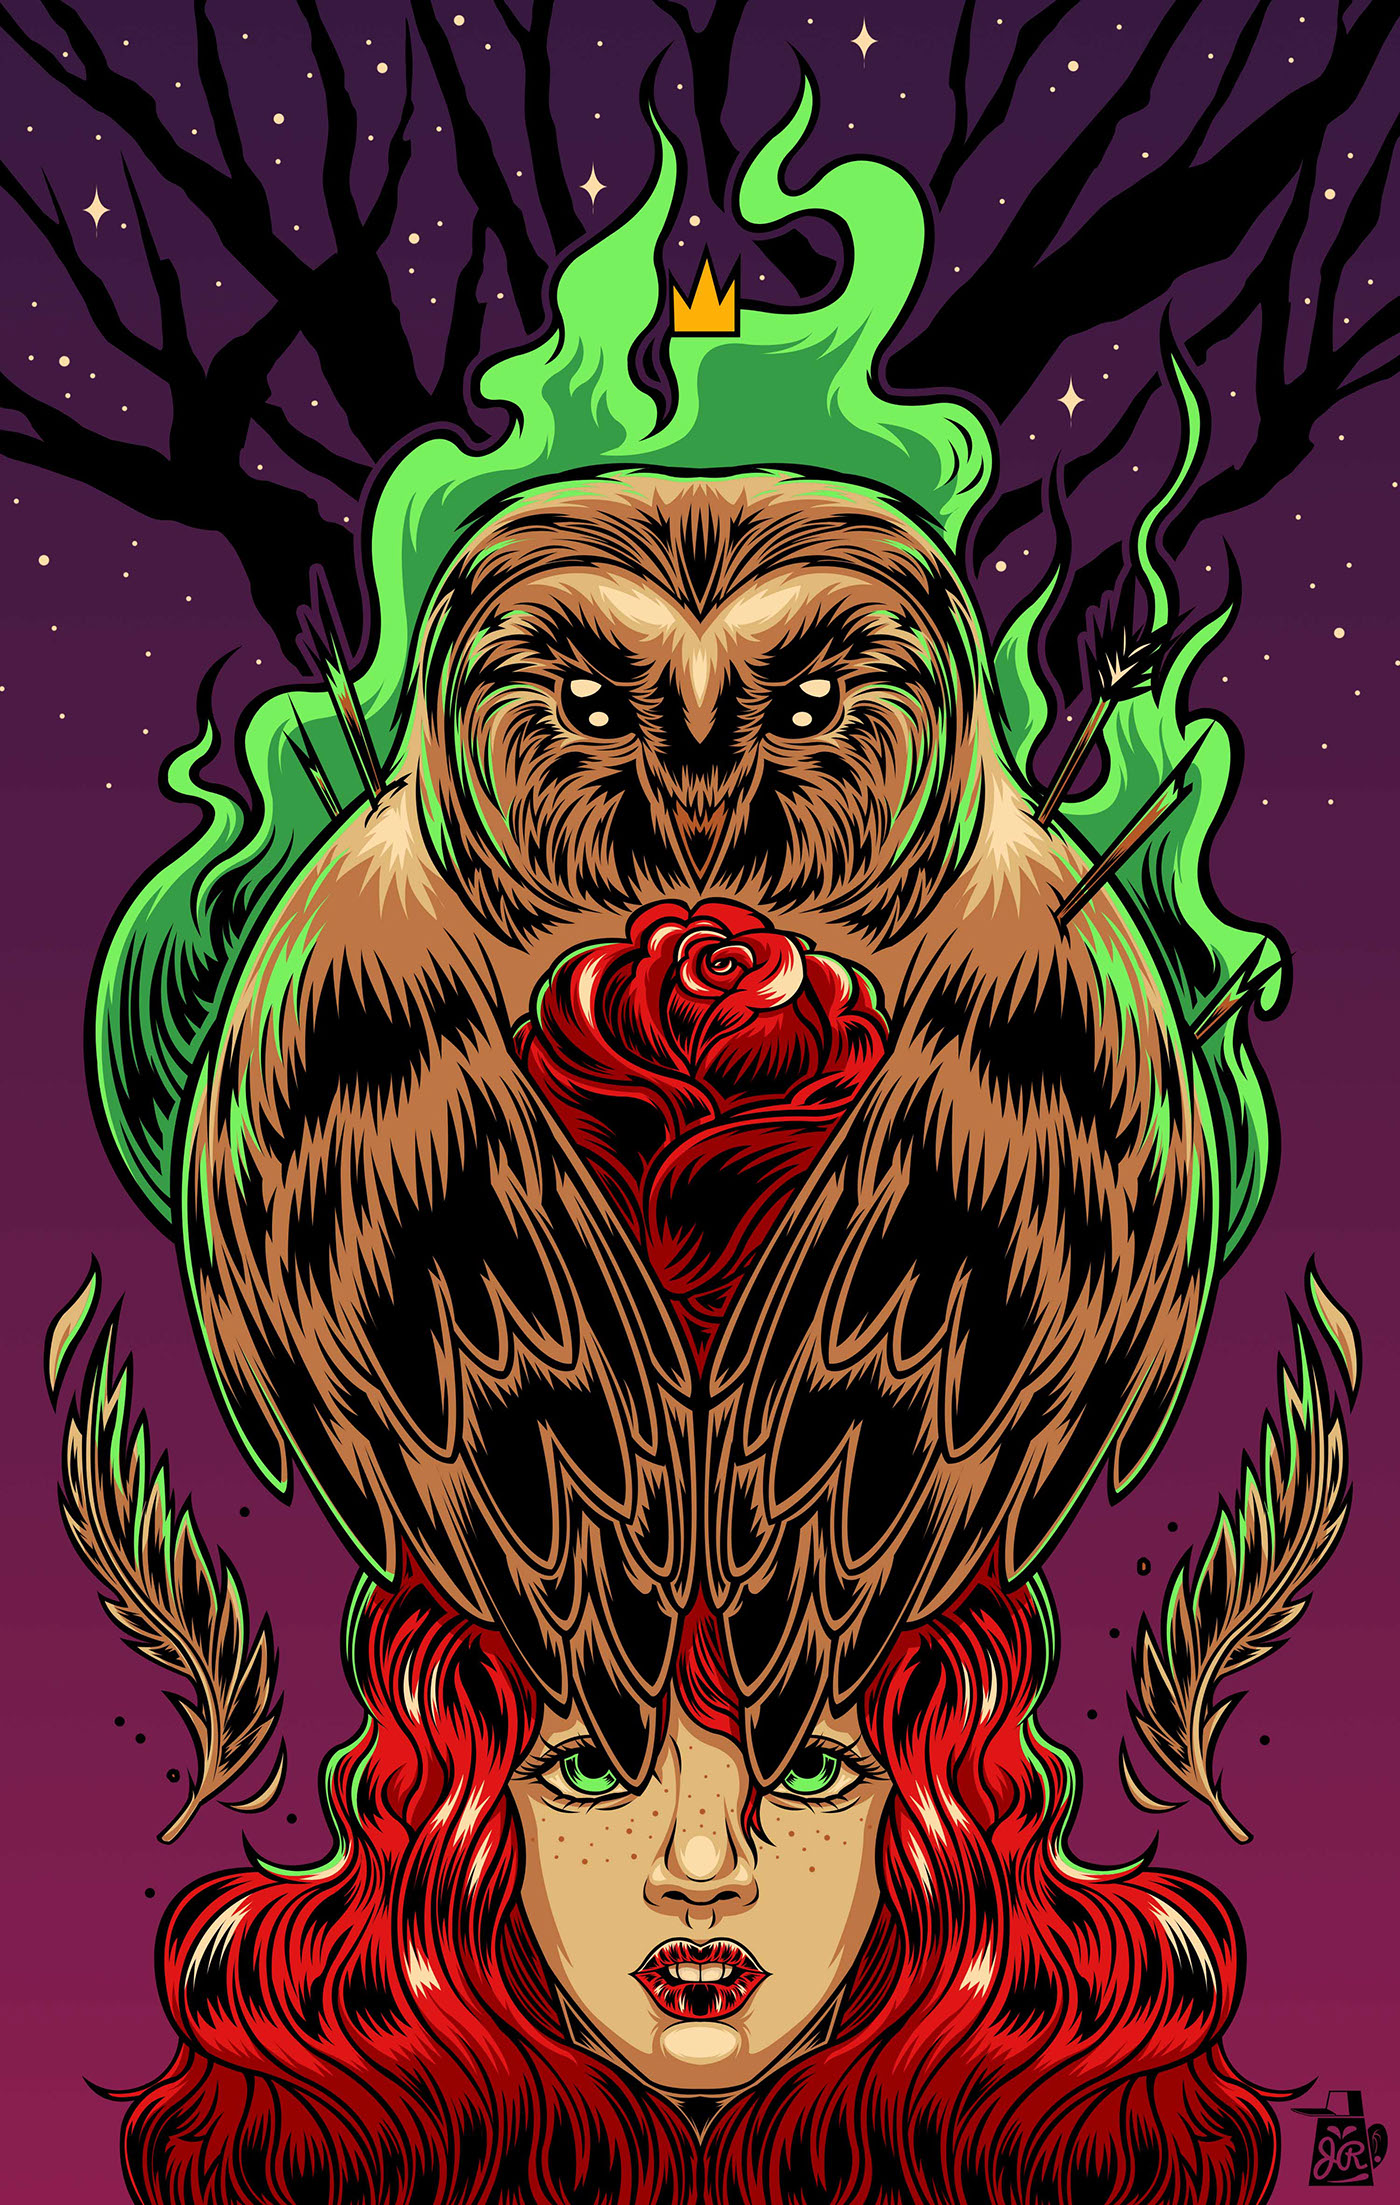 joejr redhead pelirroja proteccion protective woman animal owl lechuza mexico mazatlan skate print